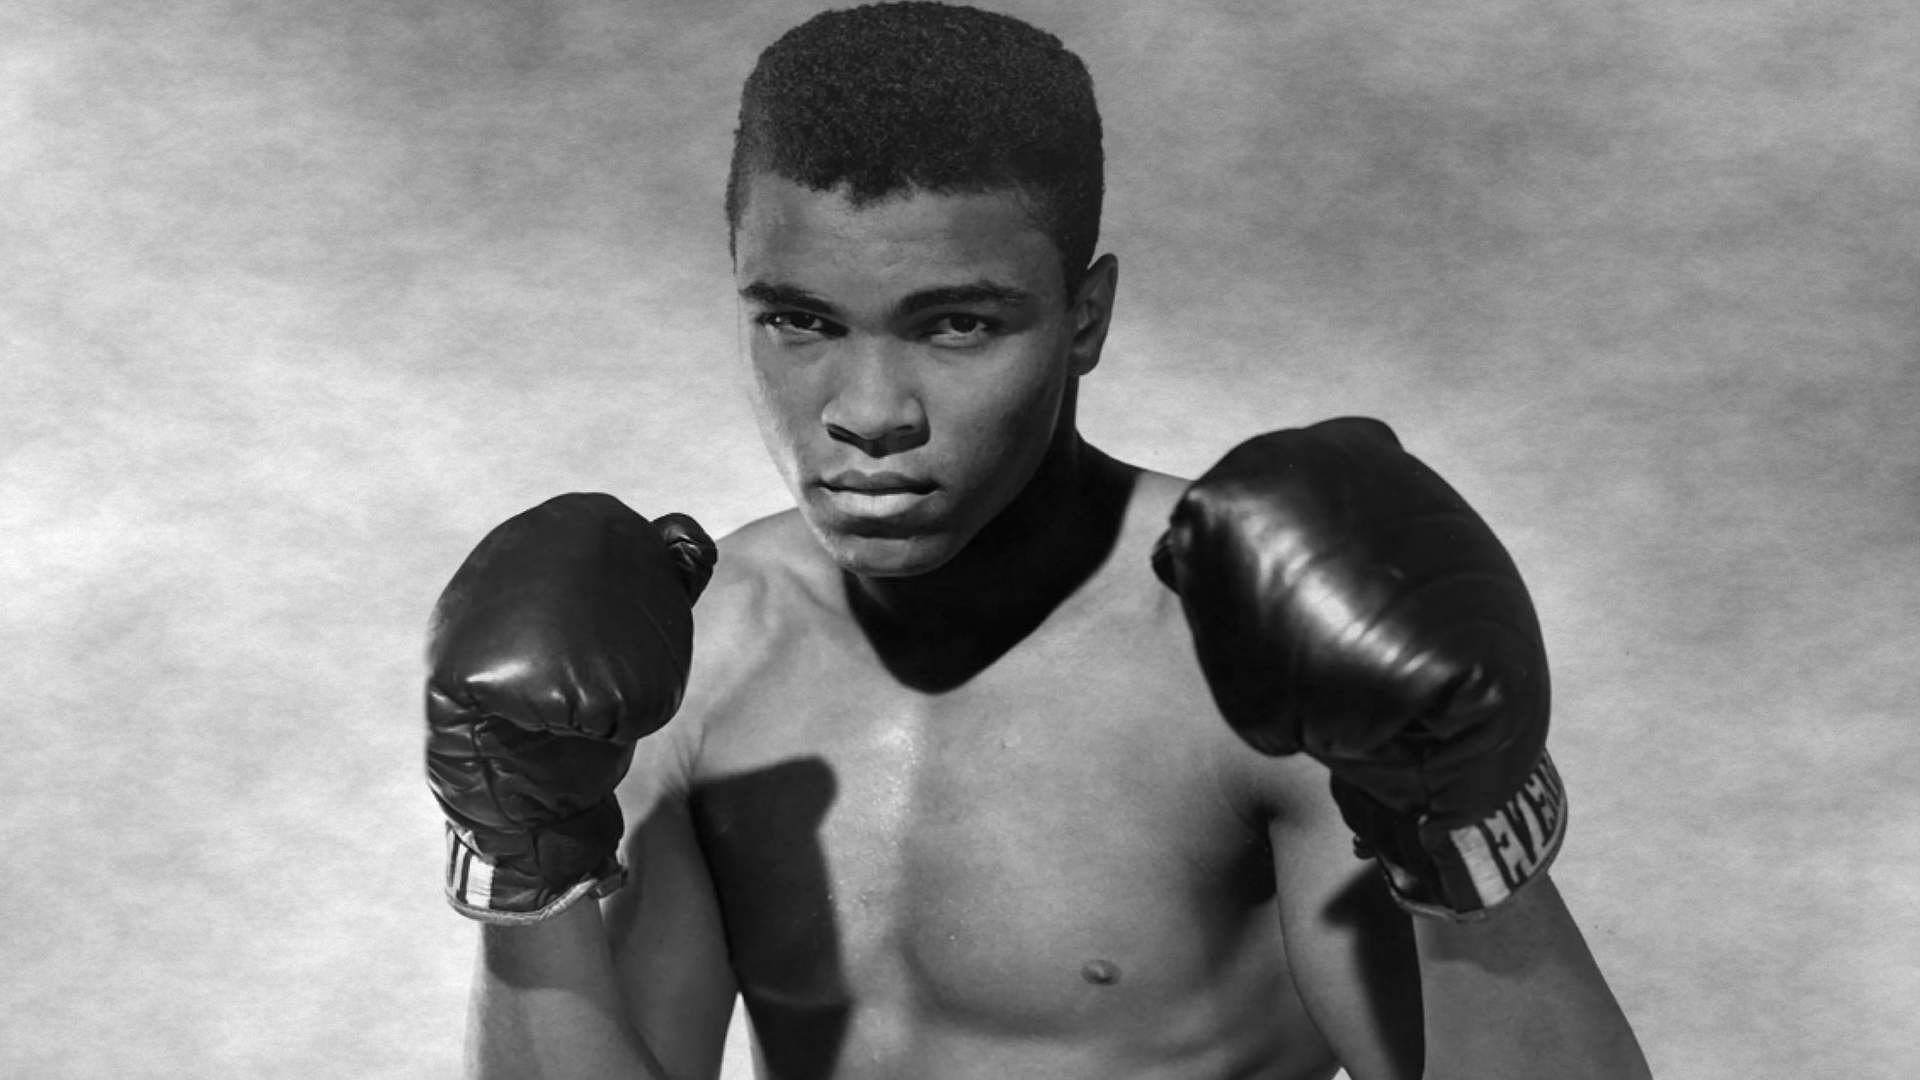 Muhammad Ali Heavyweight Boxing